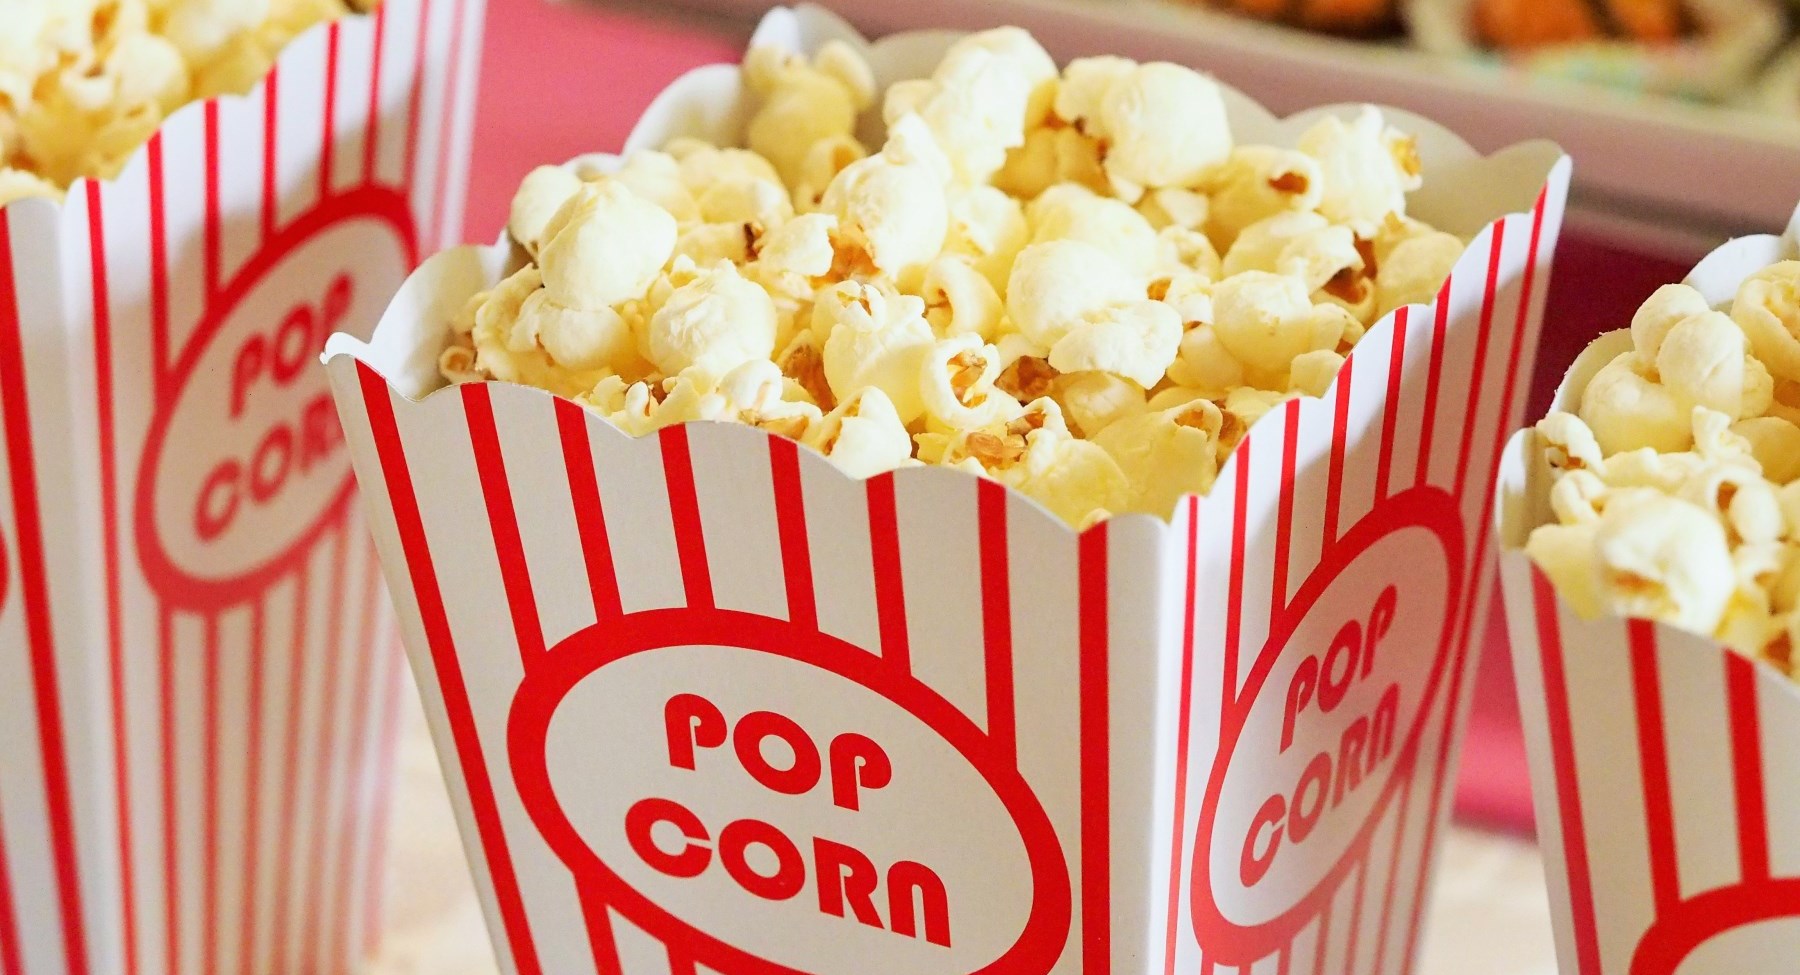 Close up of popcorn